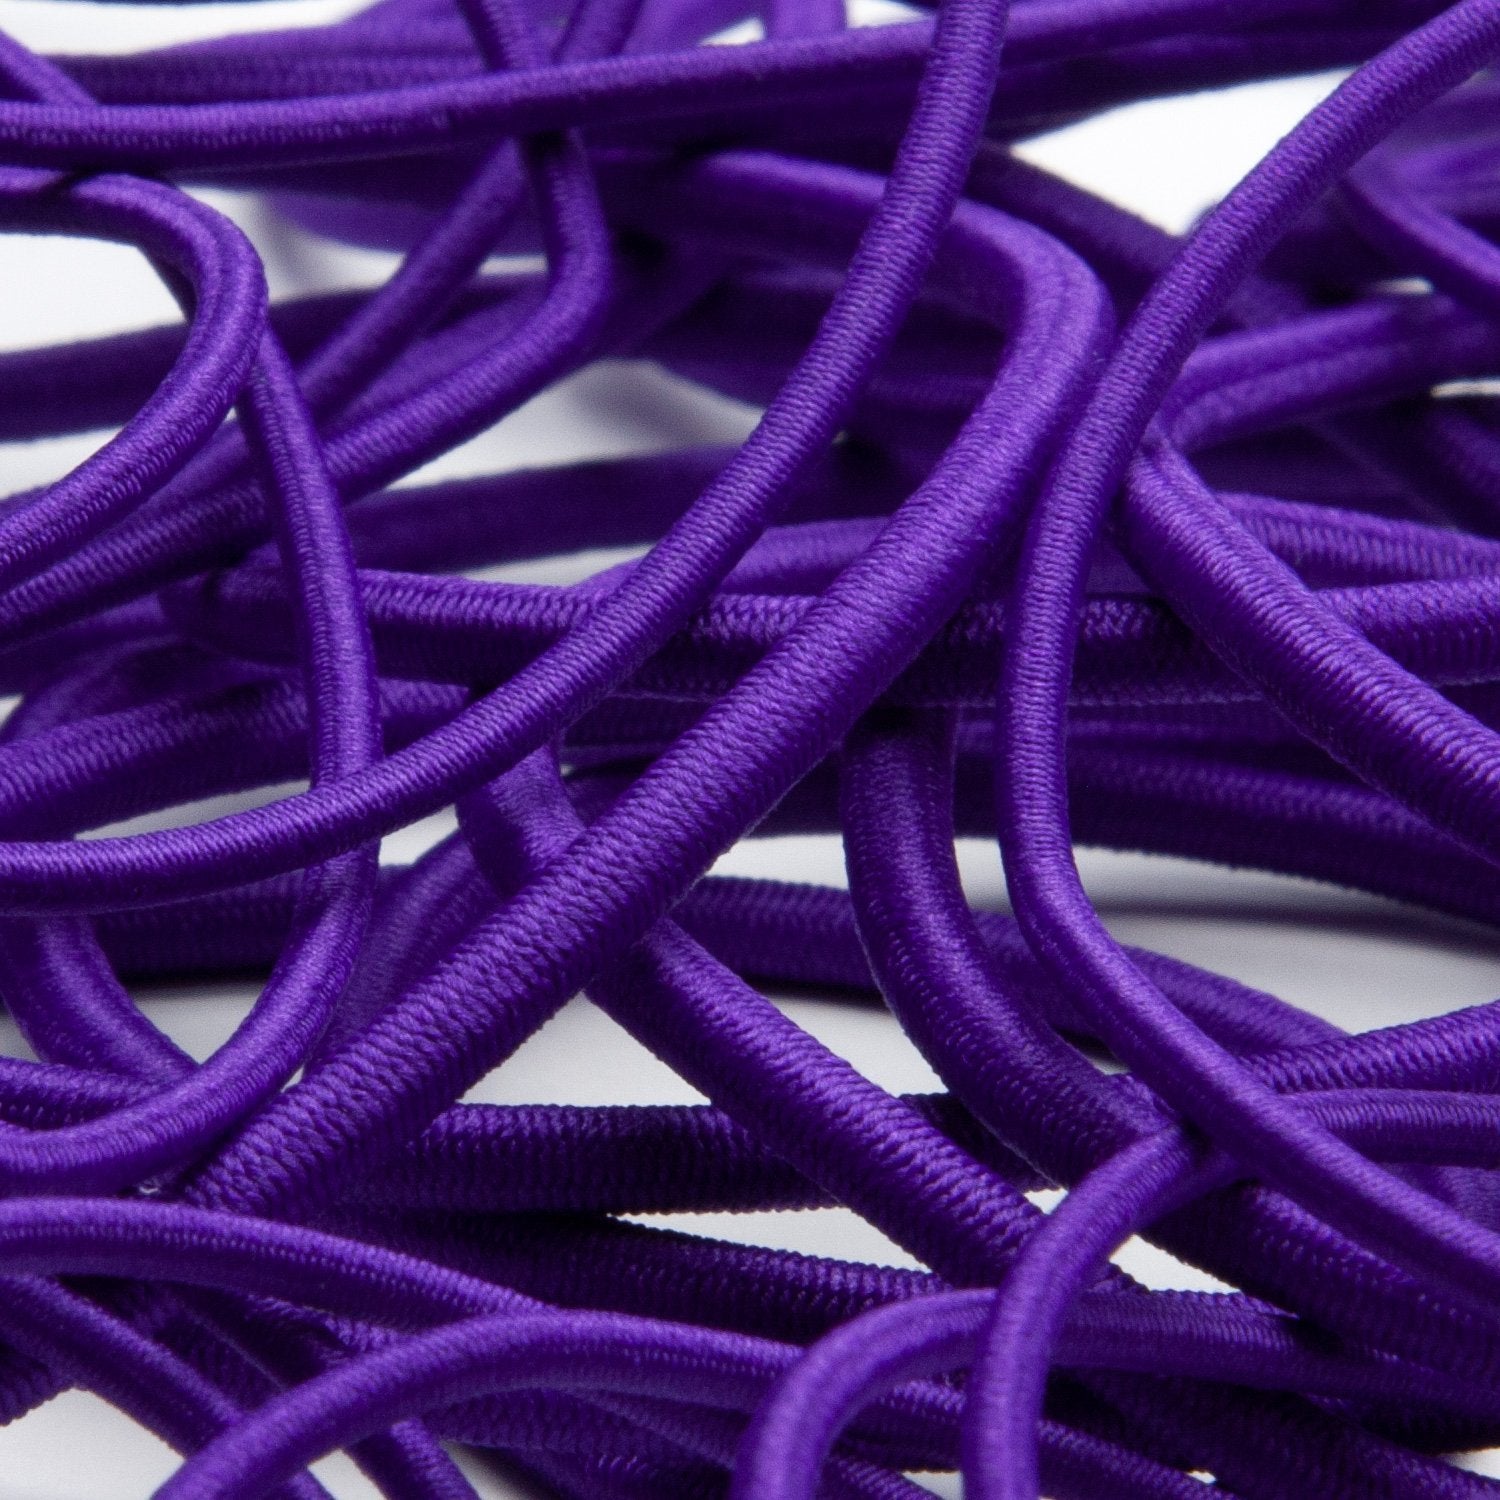 Wholesale] Polyester Elastic Cord 2mm (5/64) 50 Meters Roll - FUJIYAMA  RIBBON